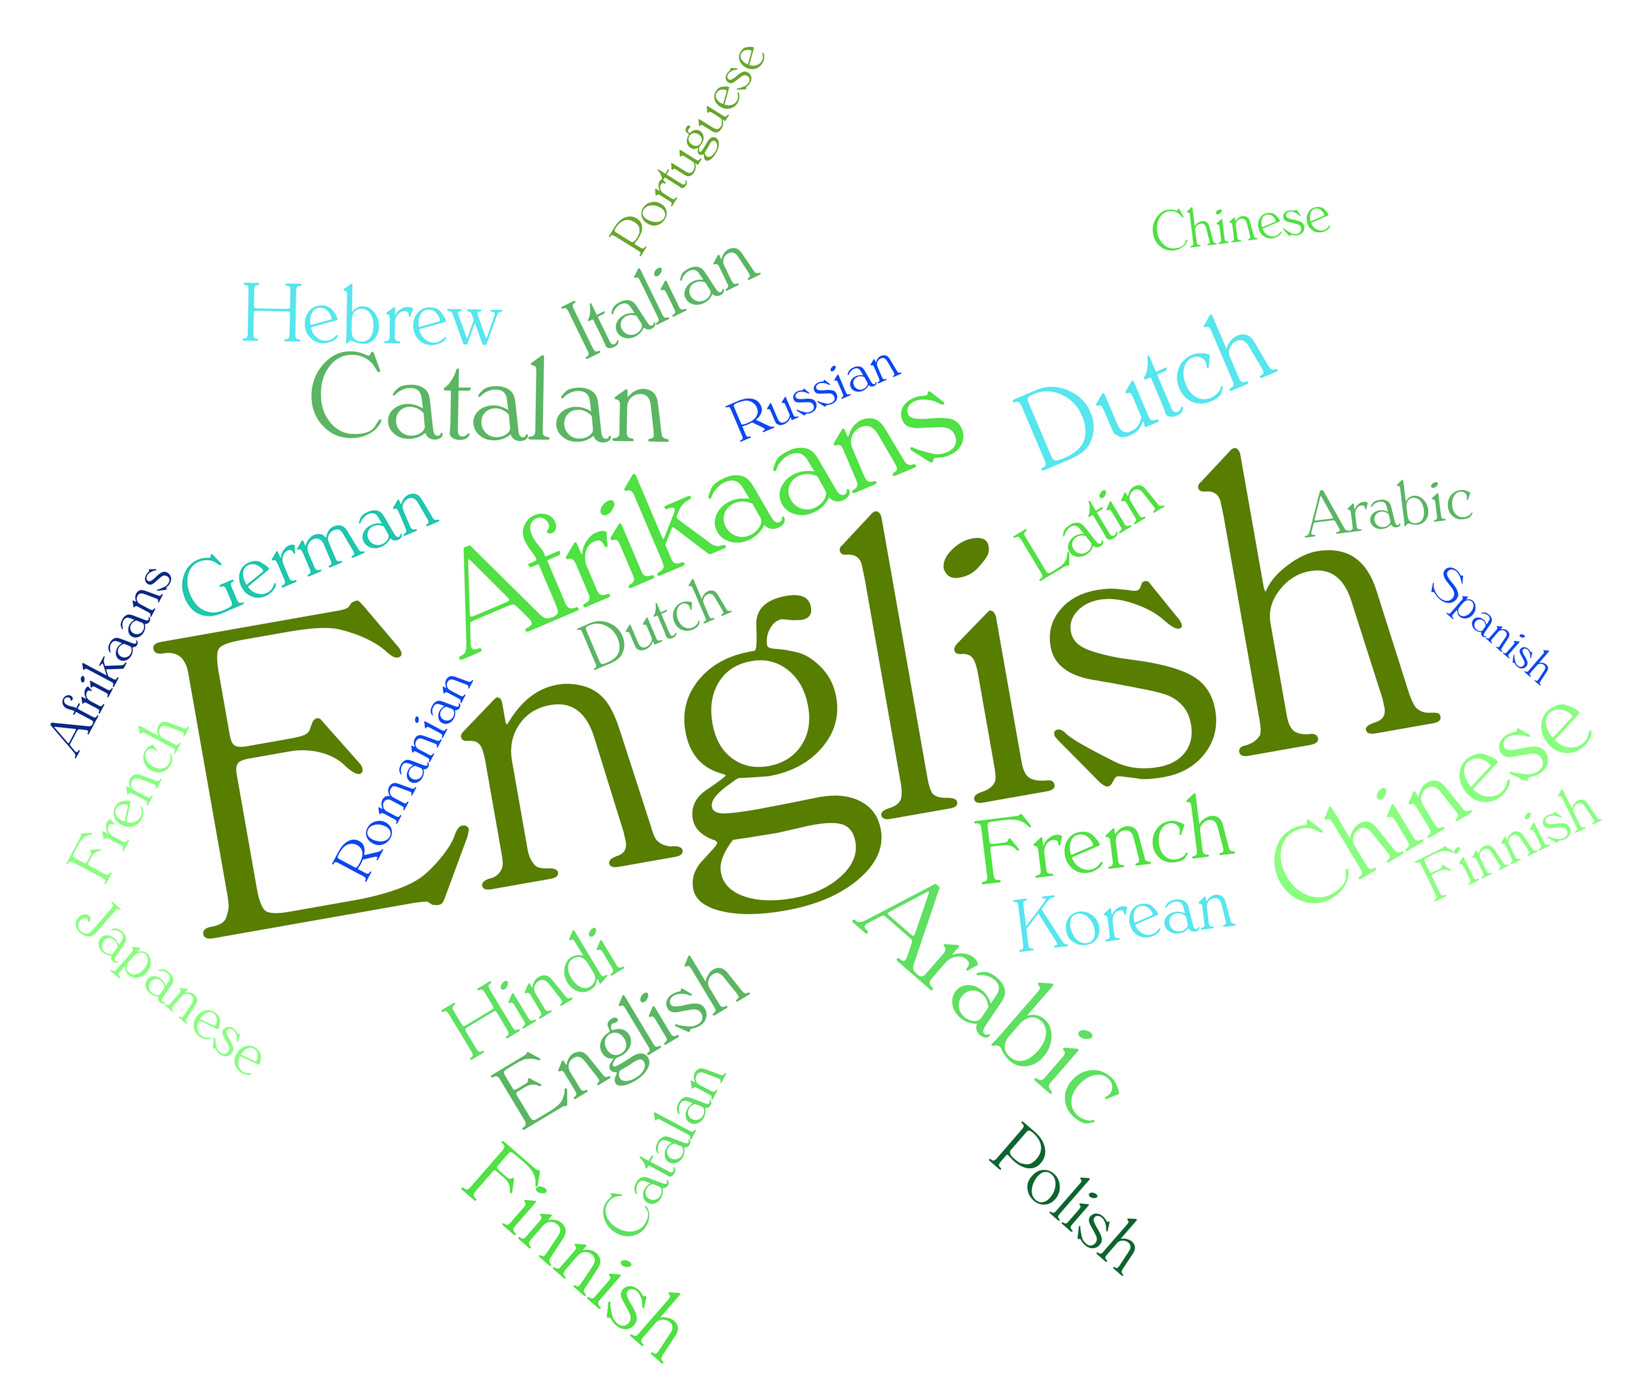 English language represents britain languages and text photo